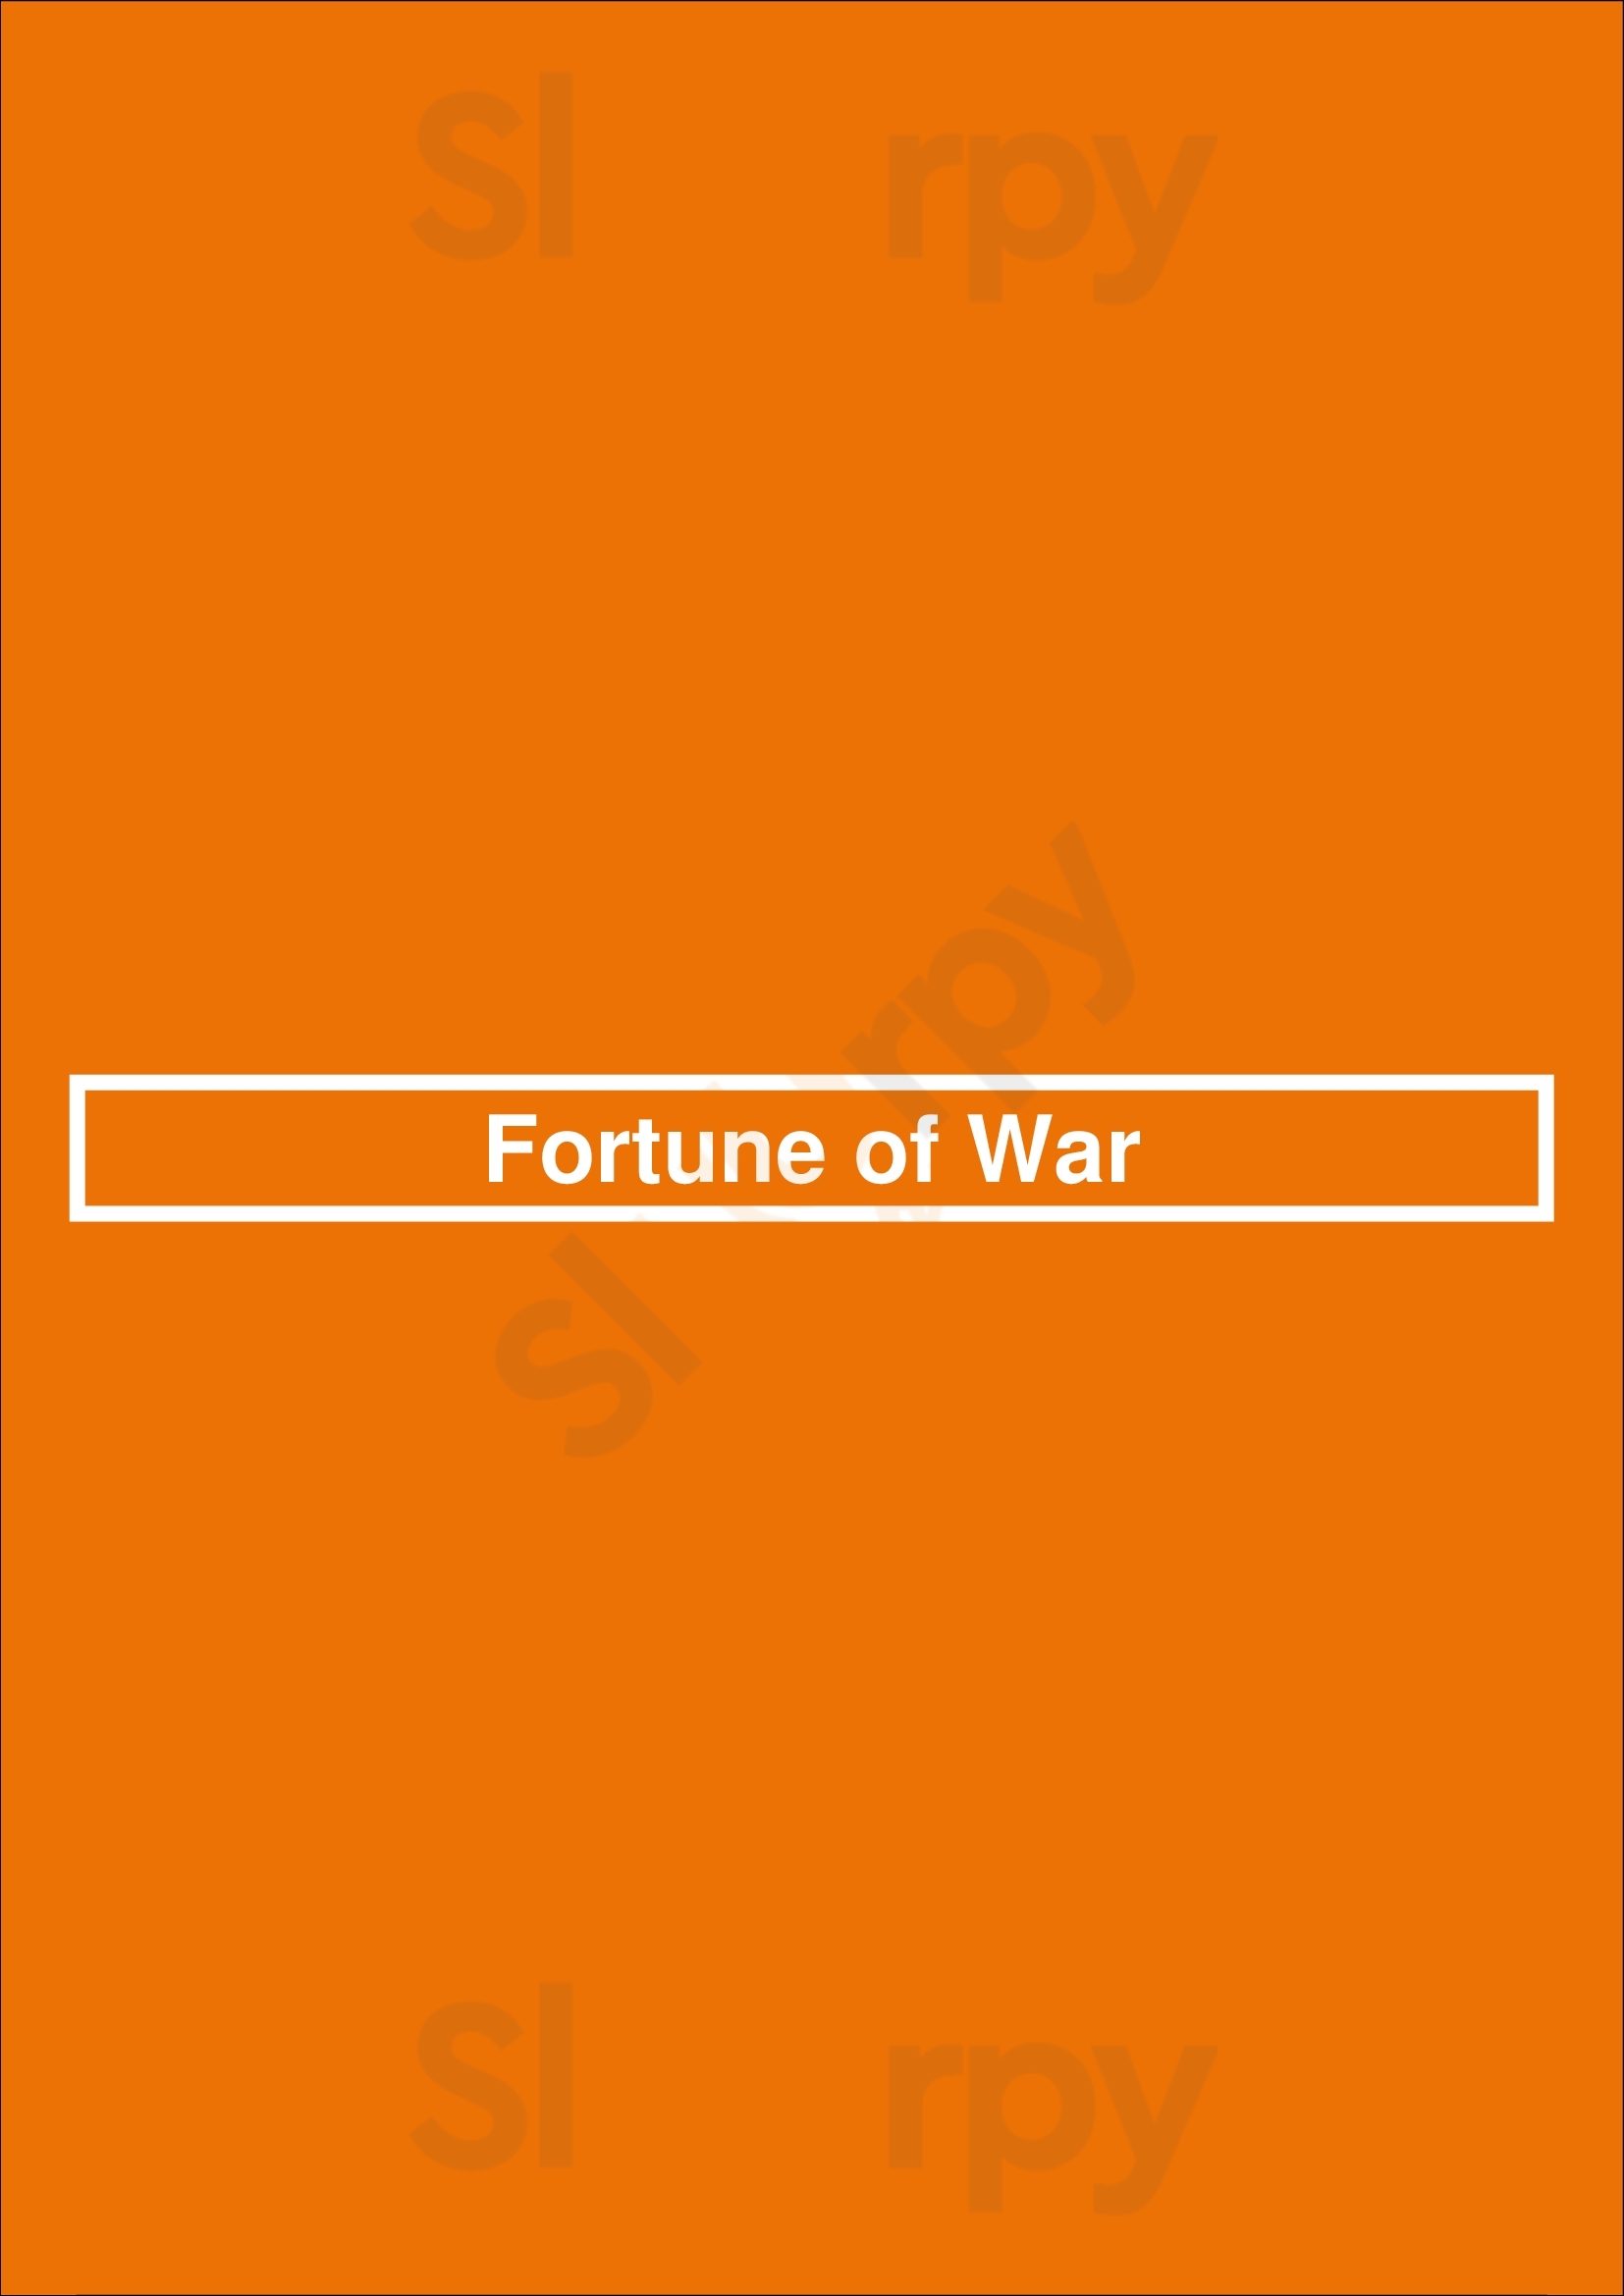 Fortune Of War Sydney Menu - 1